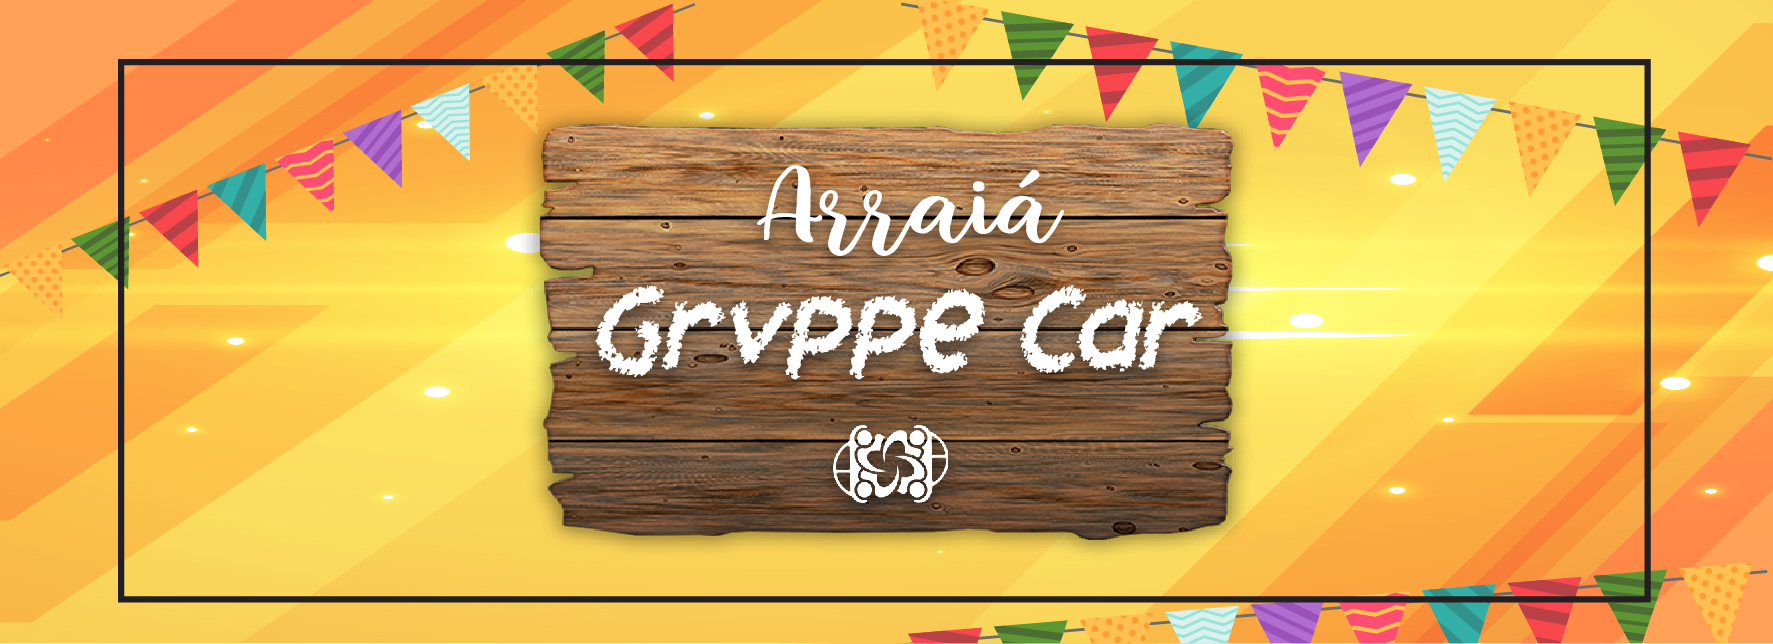 Festa Junina Grvppe Car 2019